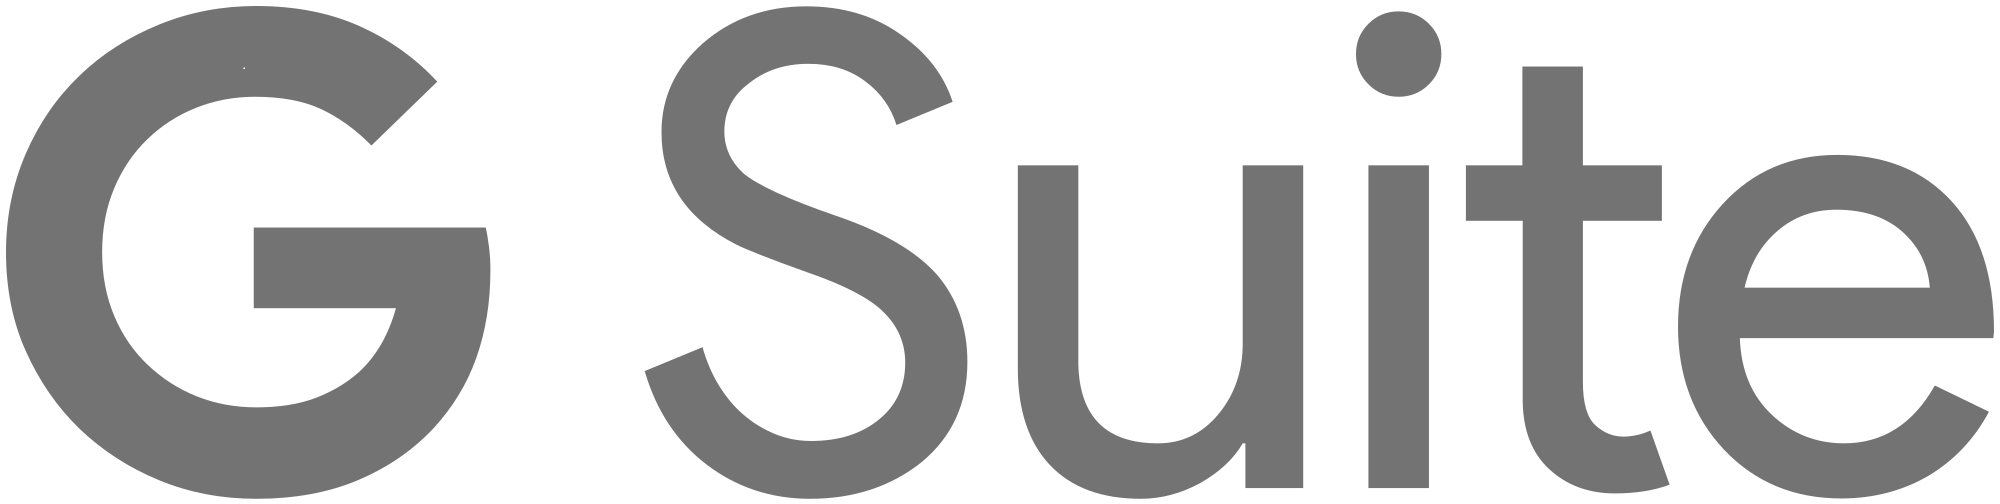 G suite logo